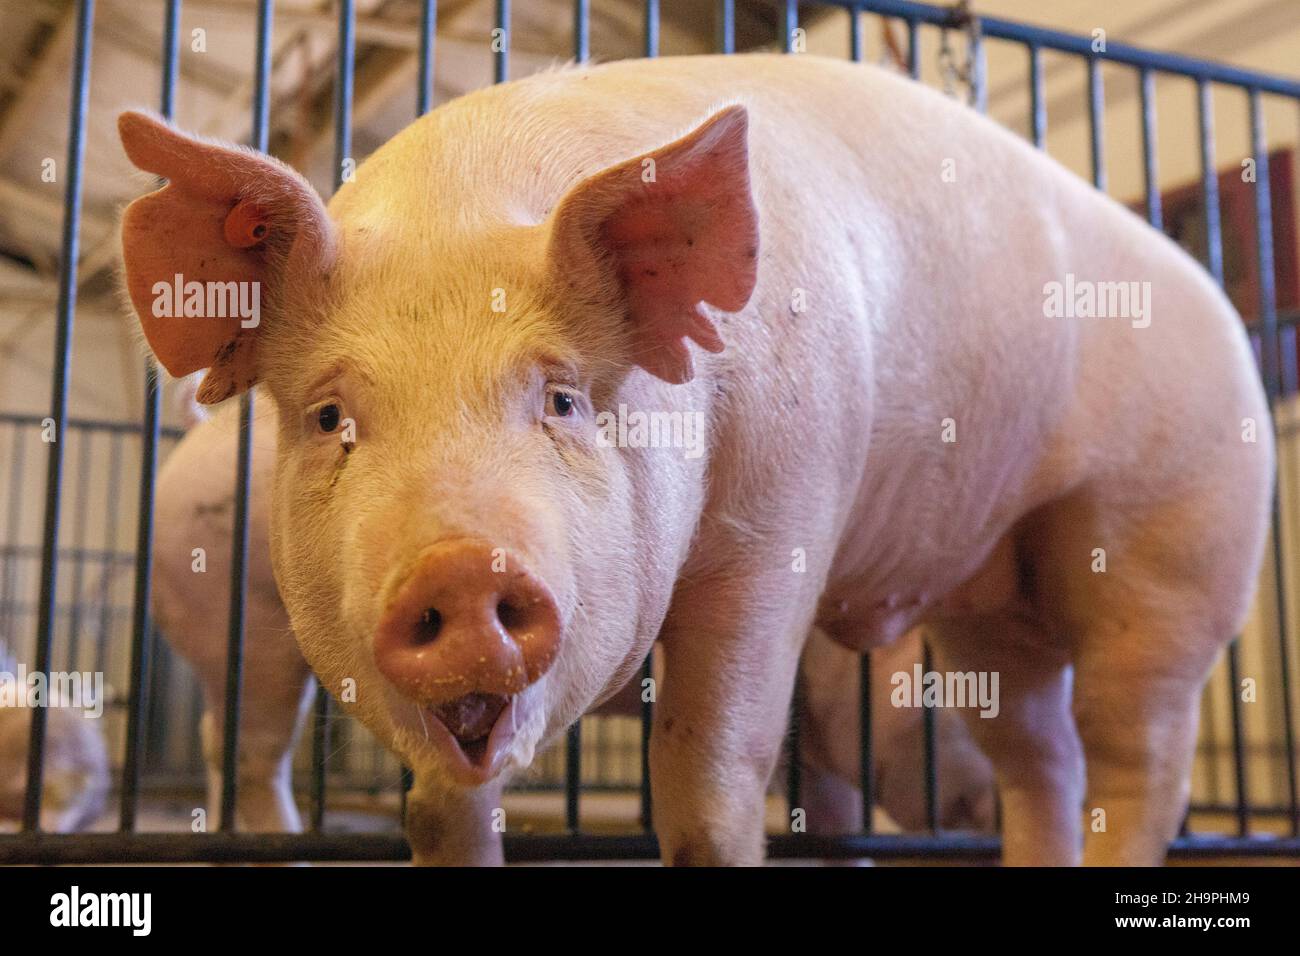 Pig facing the camera Stock Photo